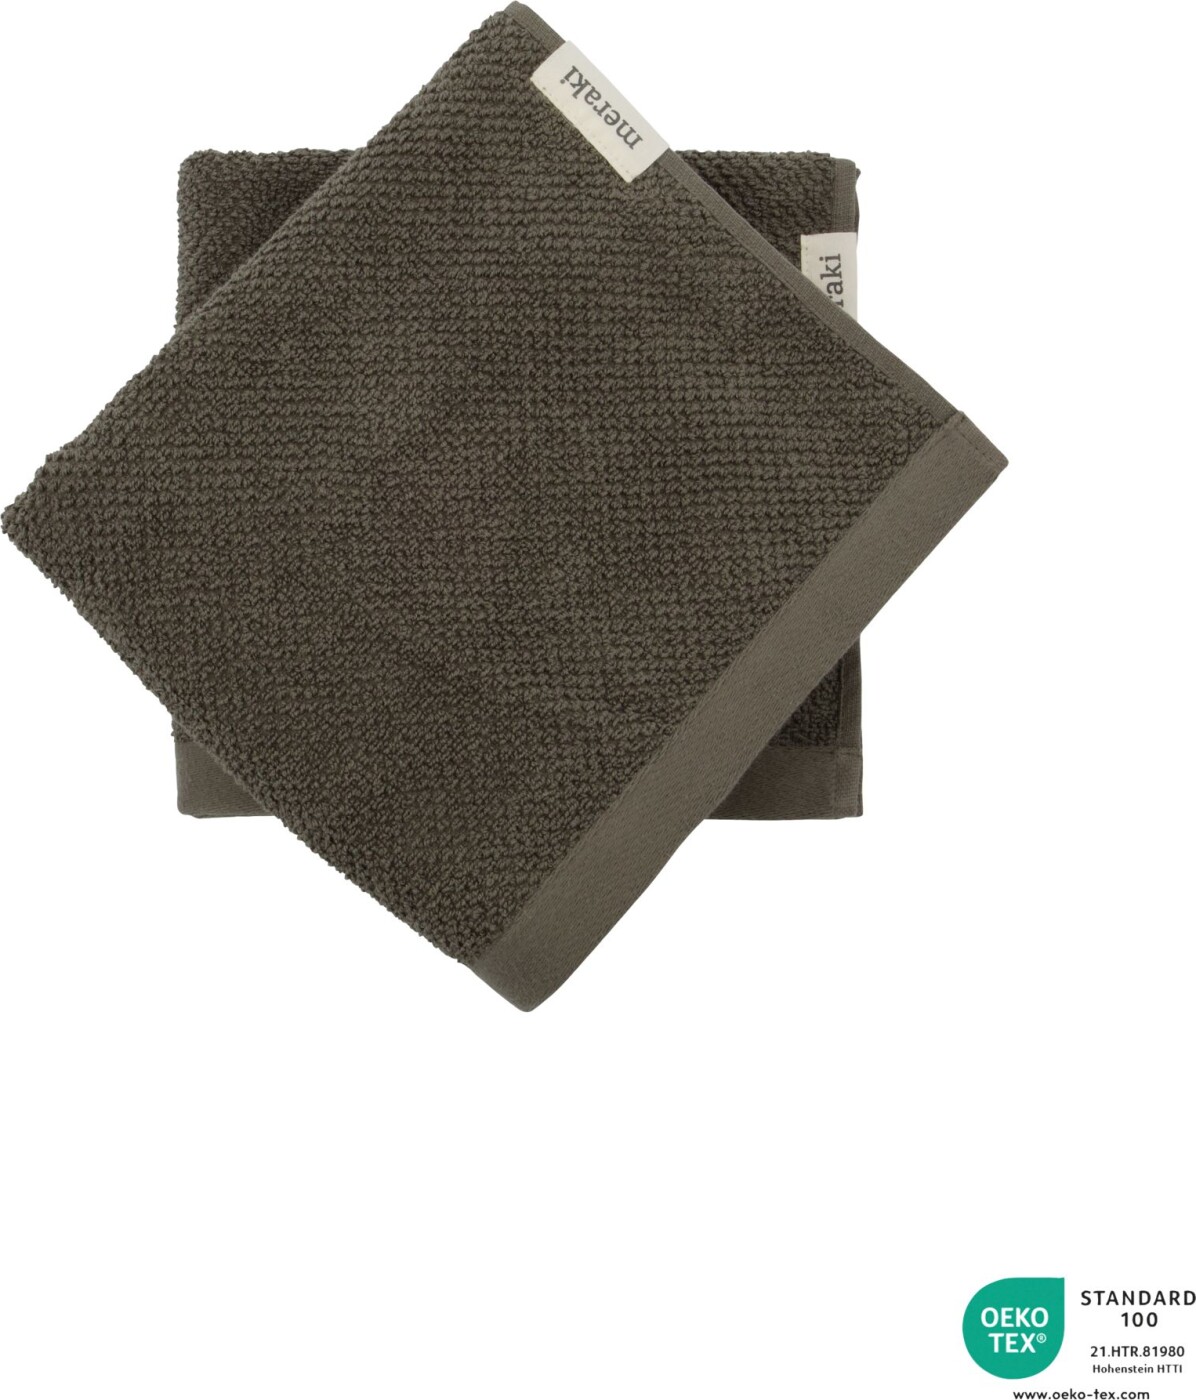 13: Meraki - Håndklæde - Solid - Army - 50x100 Cm